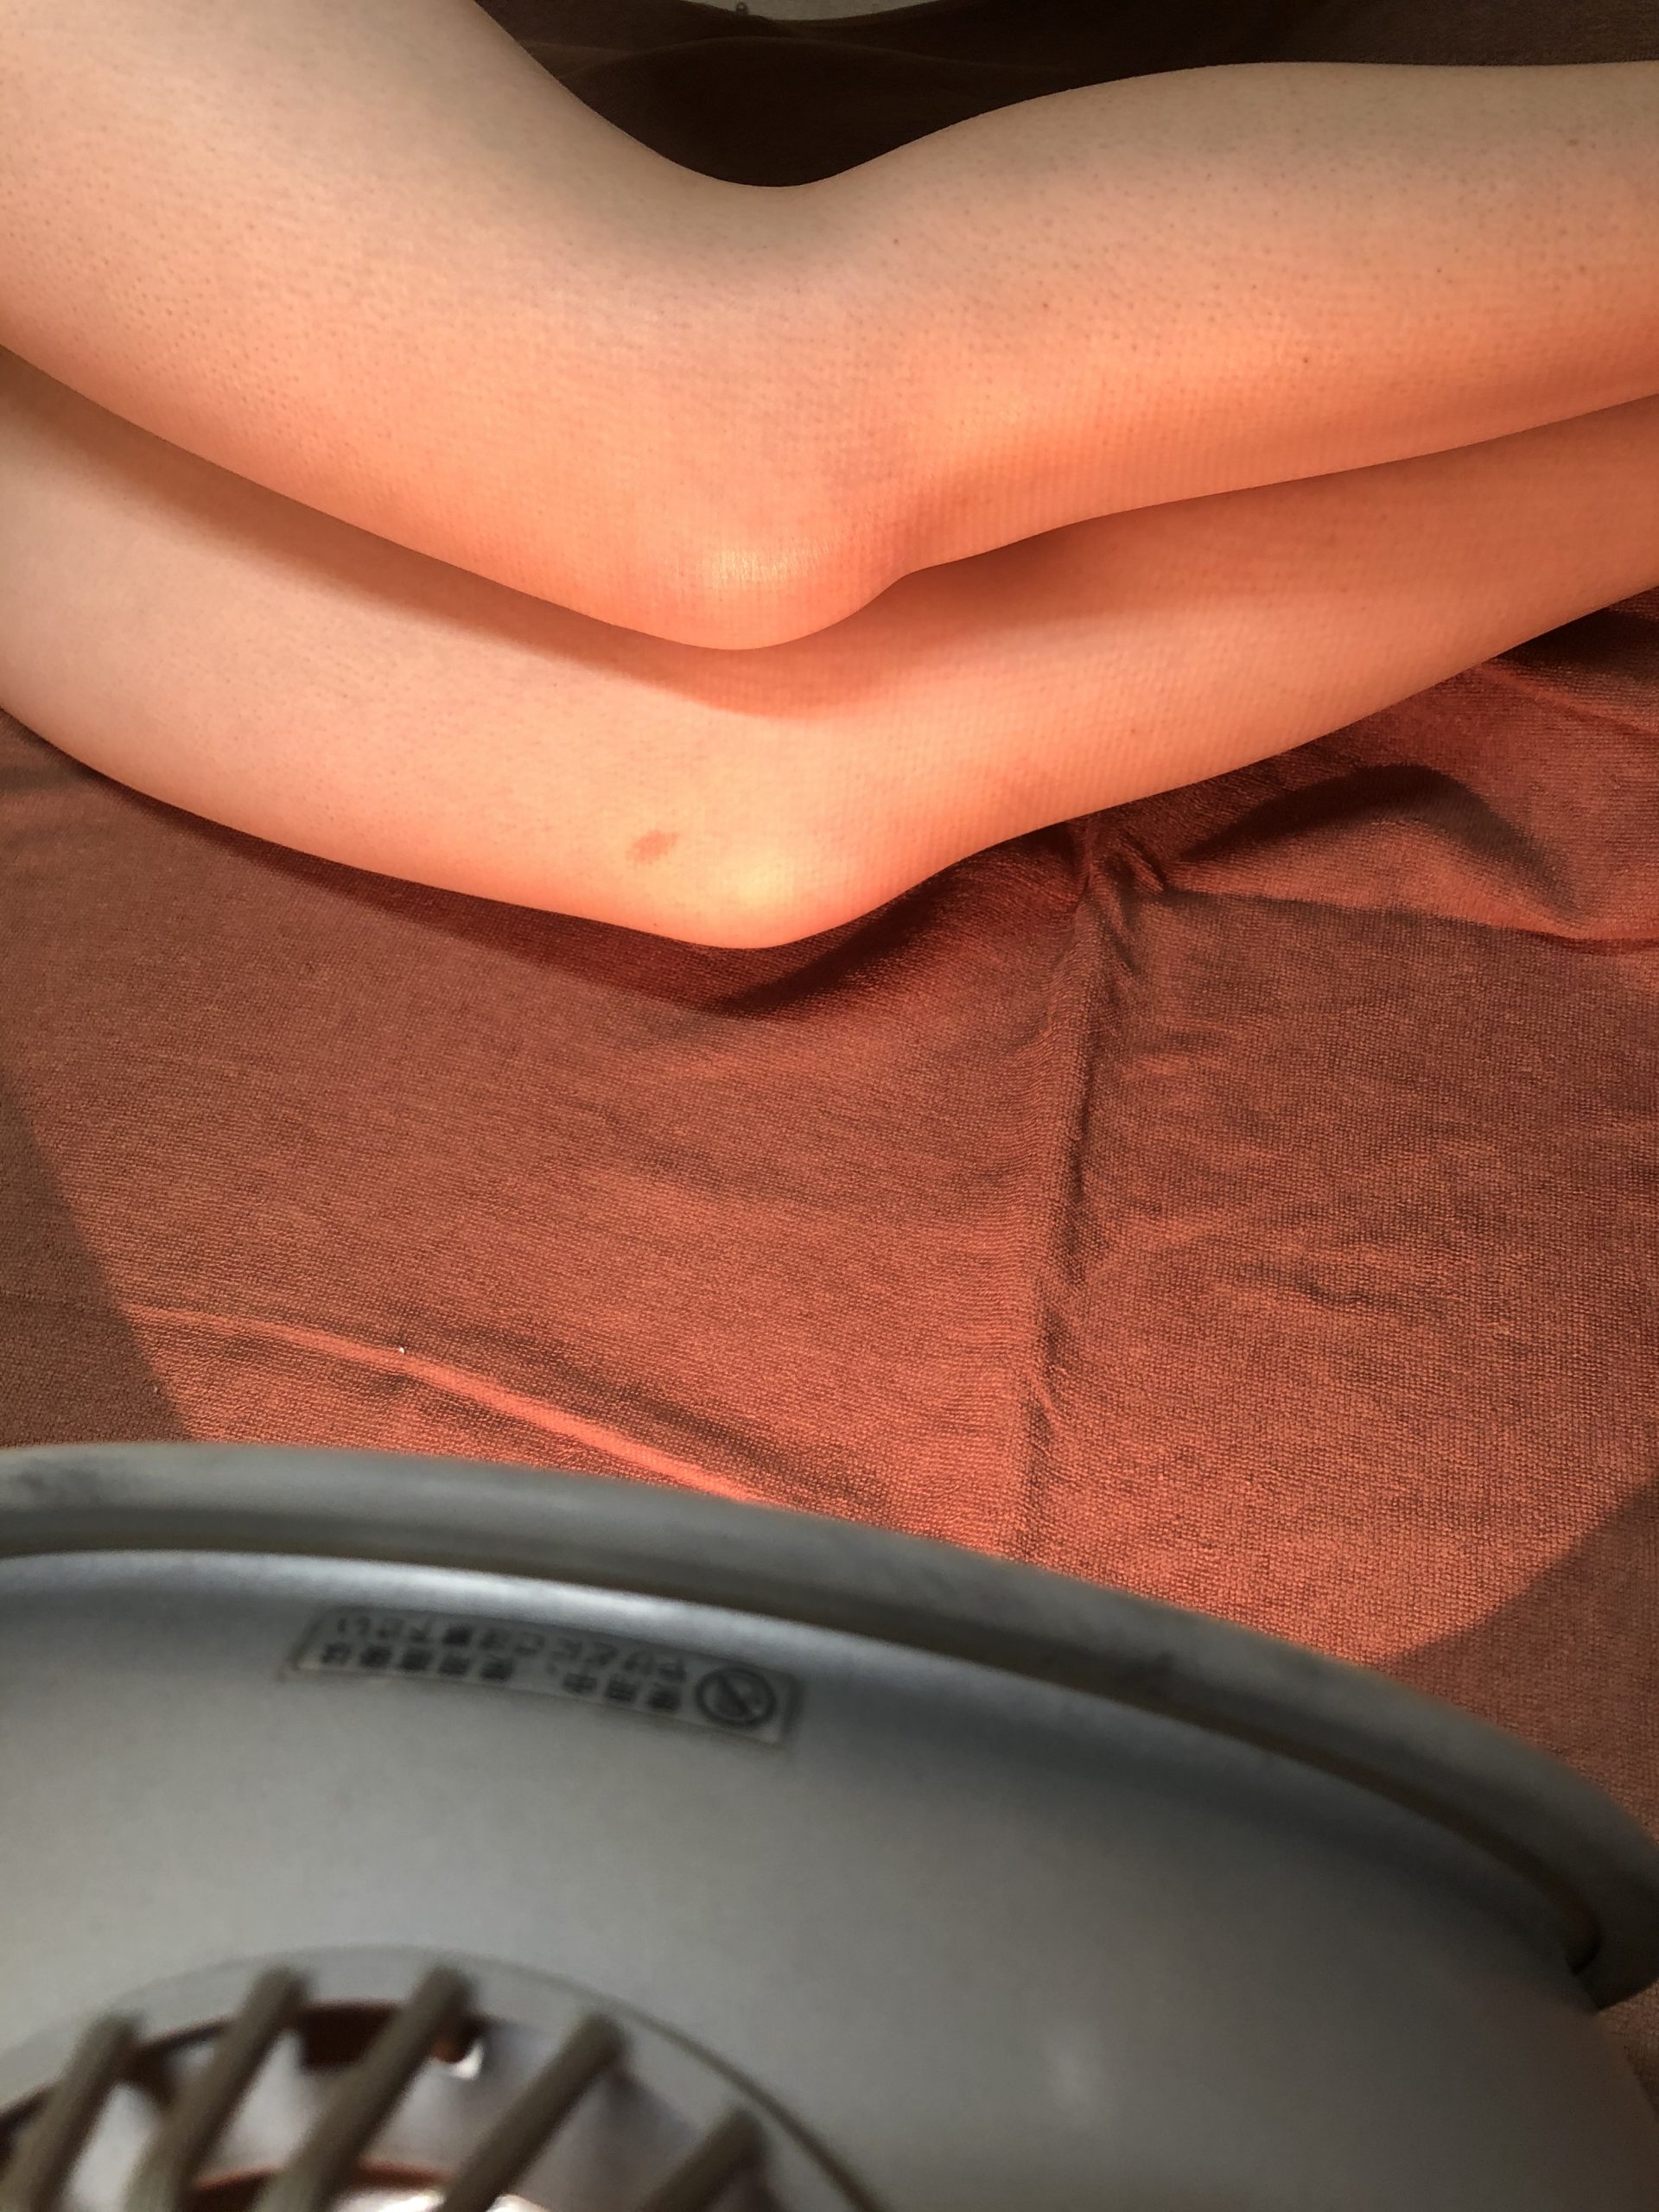 H・Mさん73歳女性、膝に水が溜まった時のコウケントー光線治療